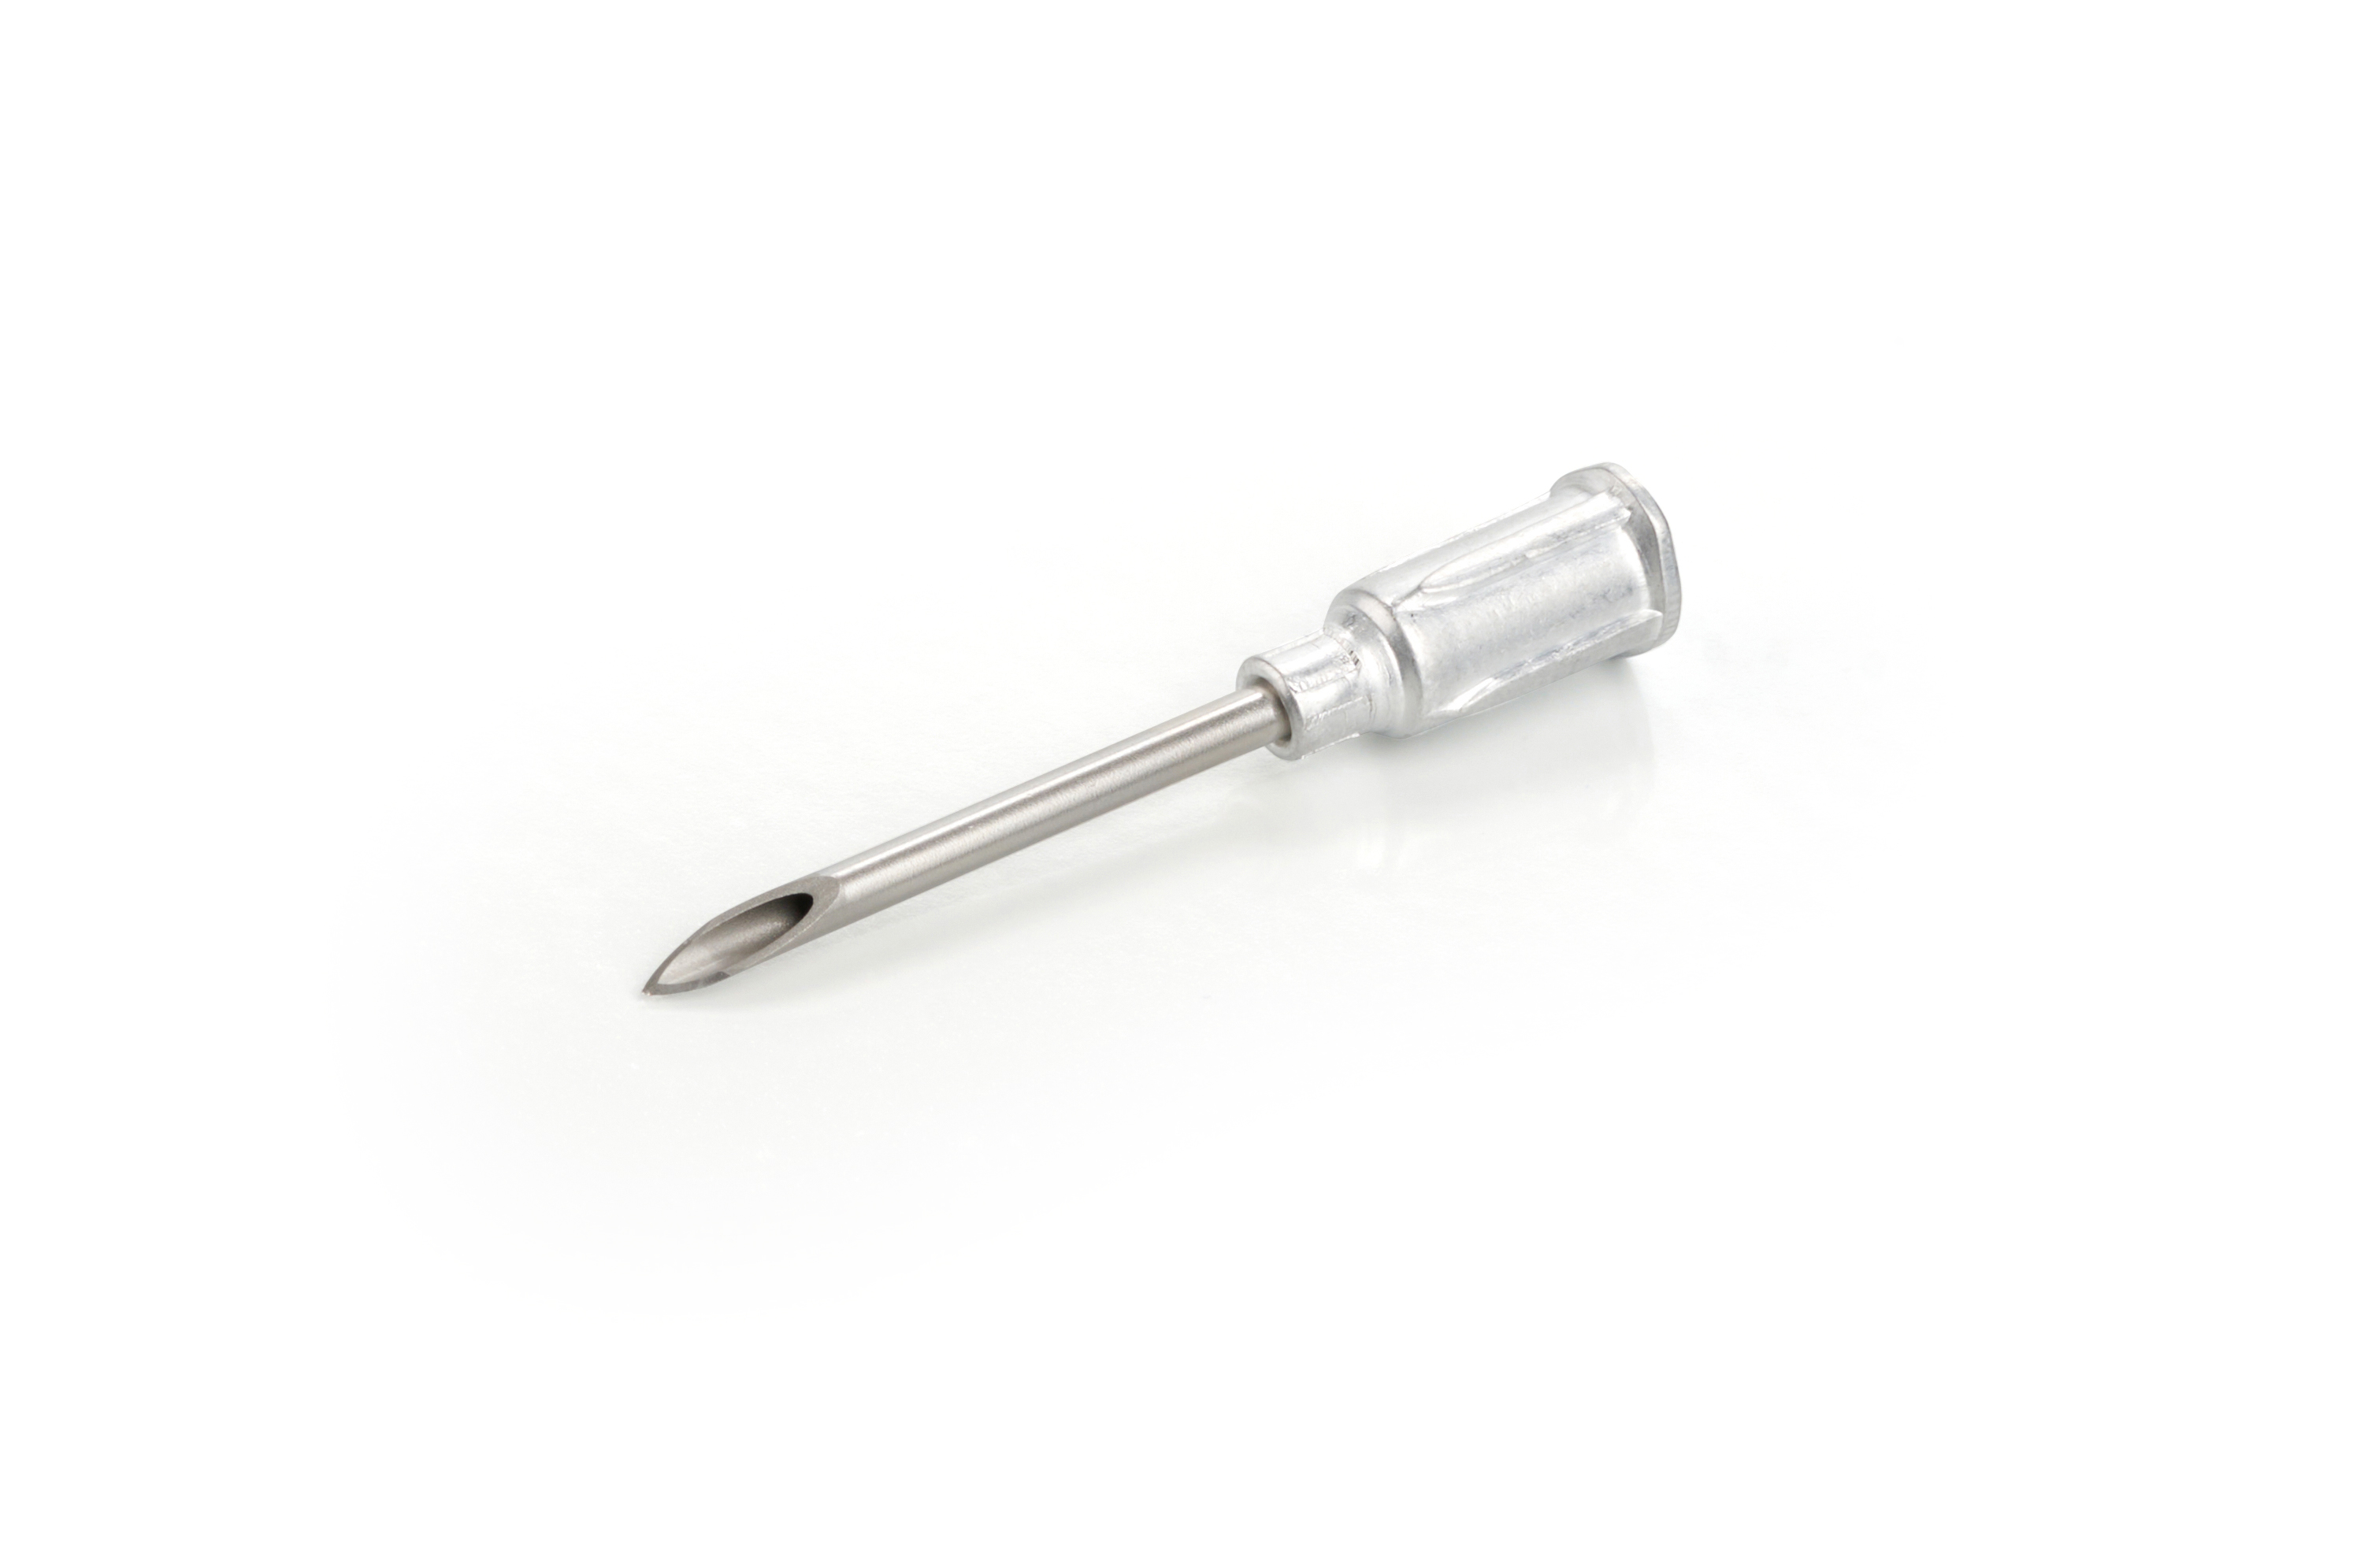 KRUUSE Disposable Needle, with aluminium hub, 2.0 x 25 mm, 14G x 1, 100/pk
